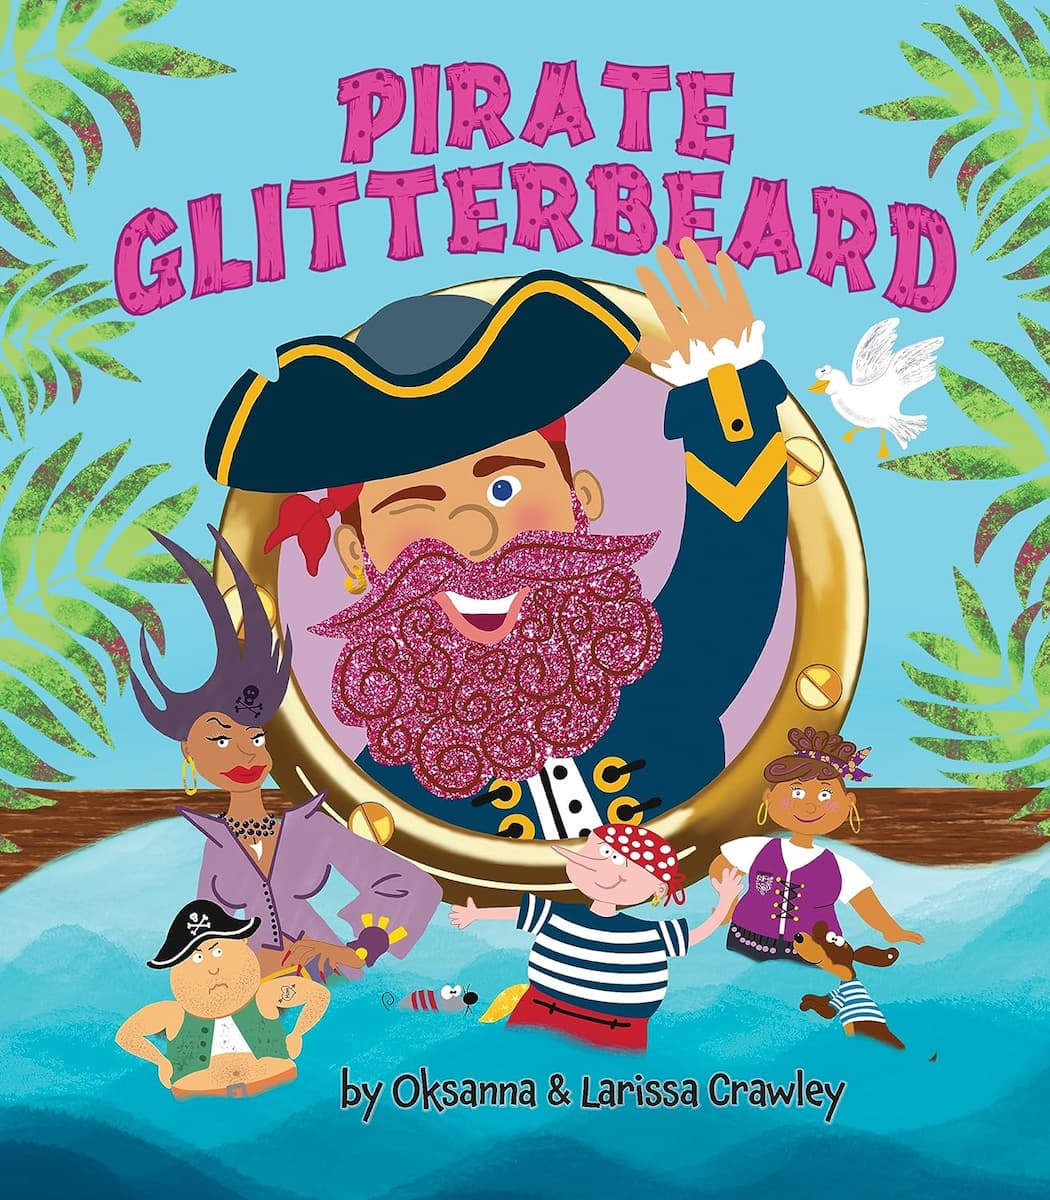 Glittering Pirate Beard